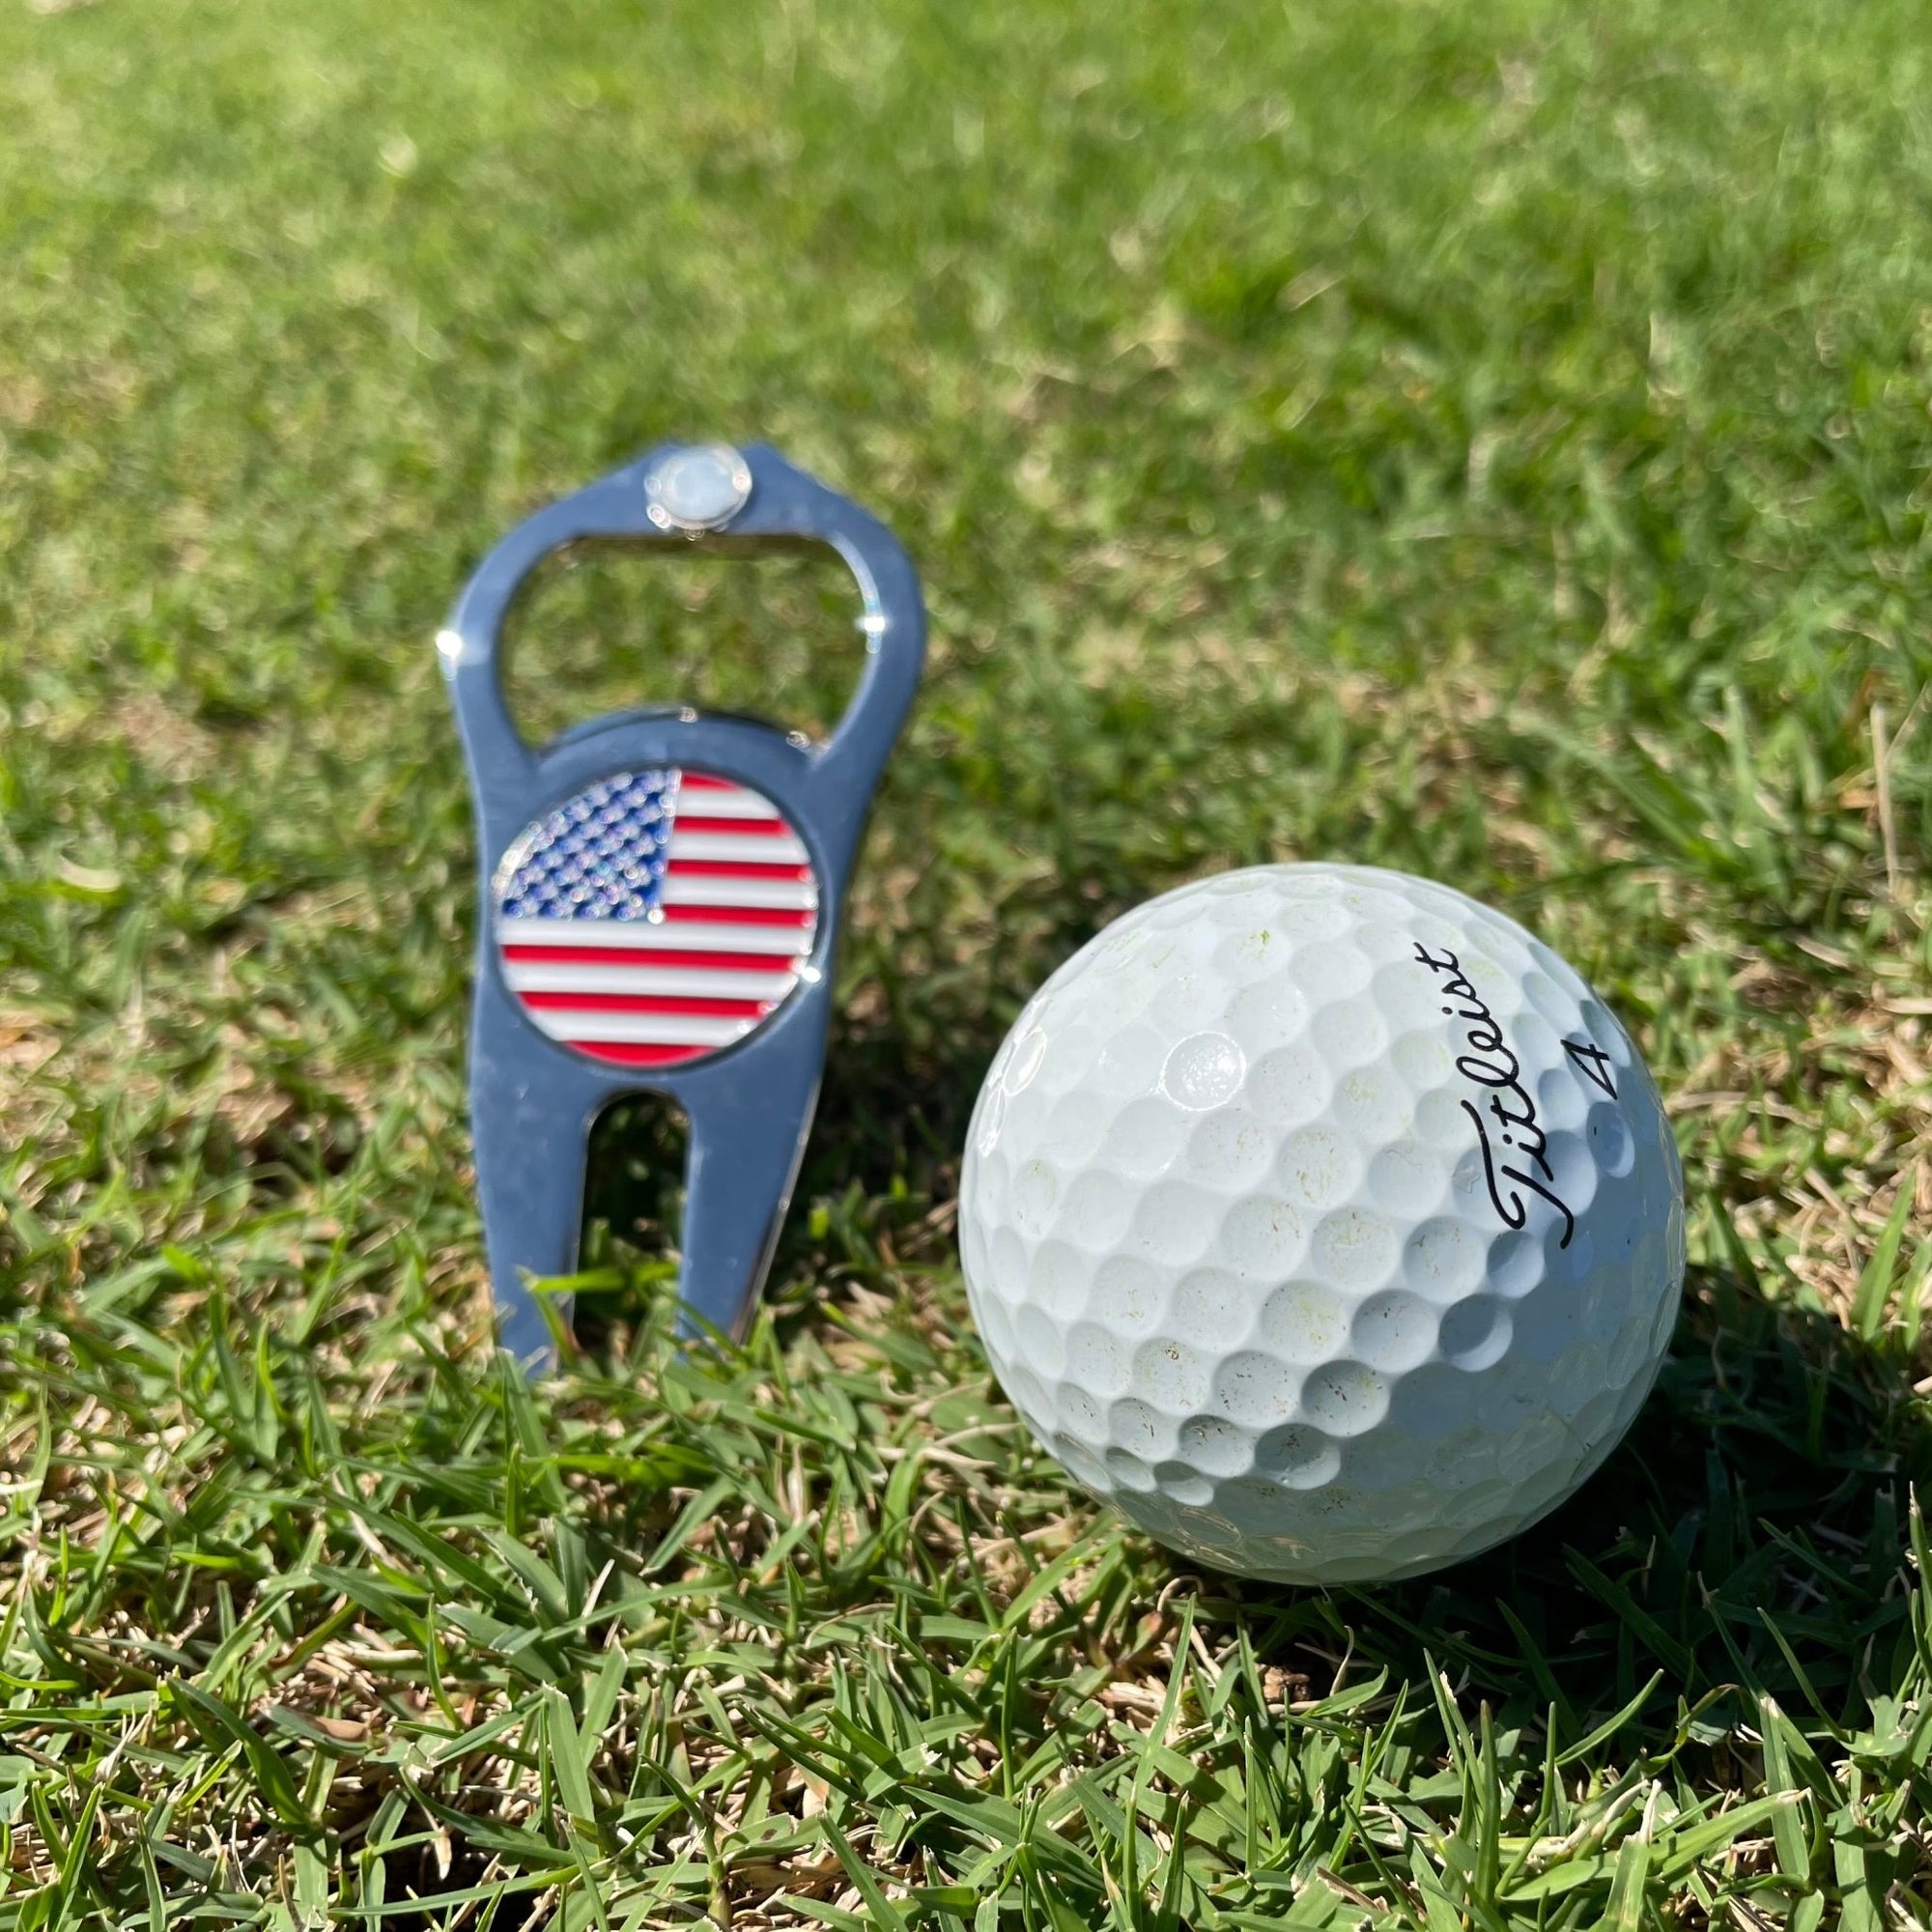 USA Golf Gift Set - Groovy Golfer